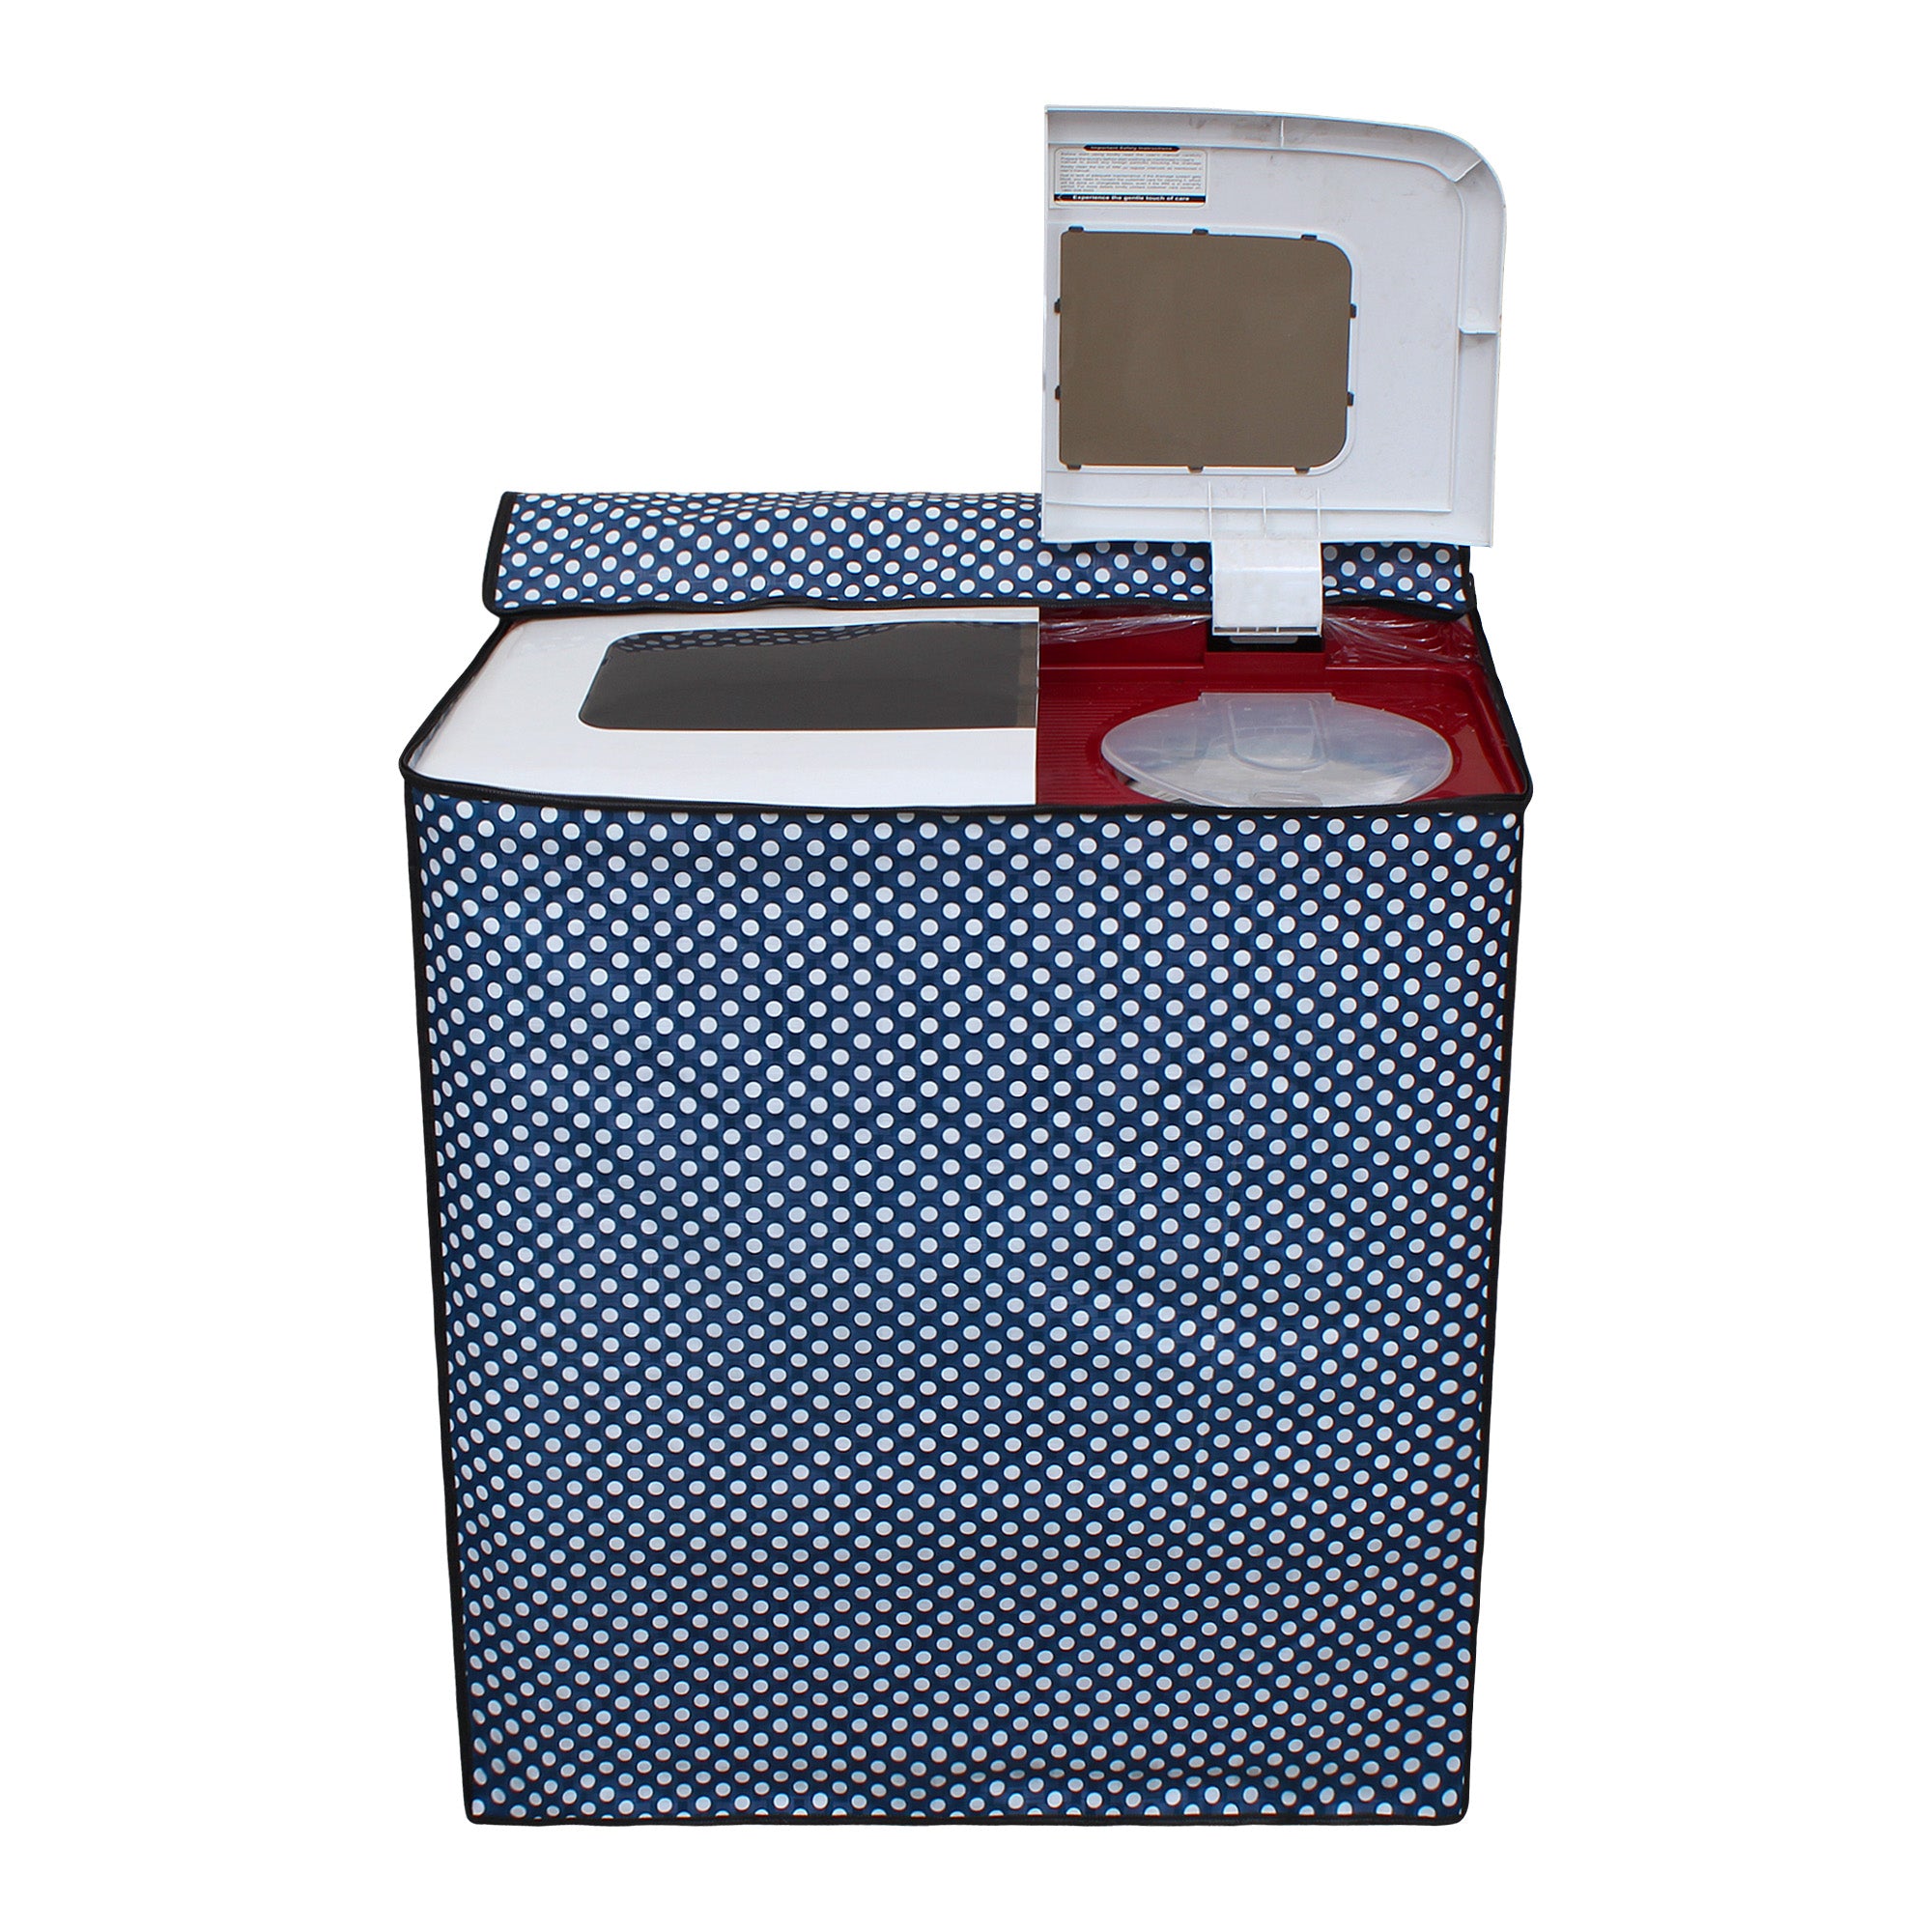 Semi Automatic Washing Machine Cover, SA47 - Dream Care Furnishings Private Limited